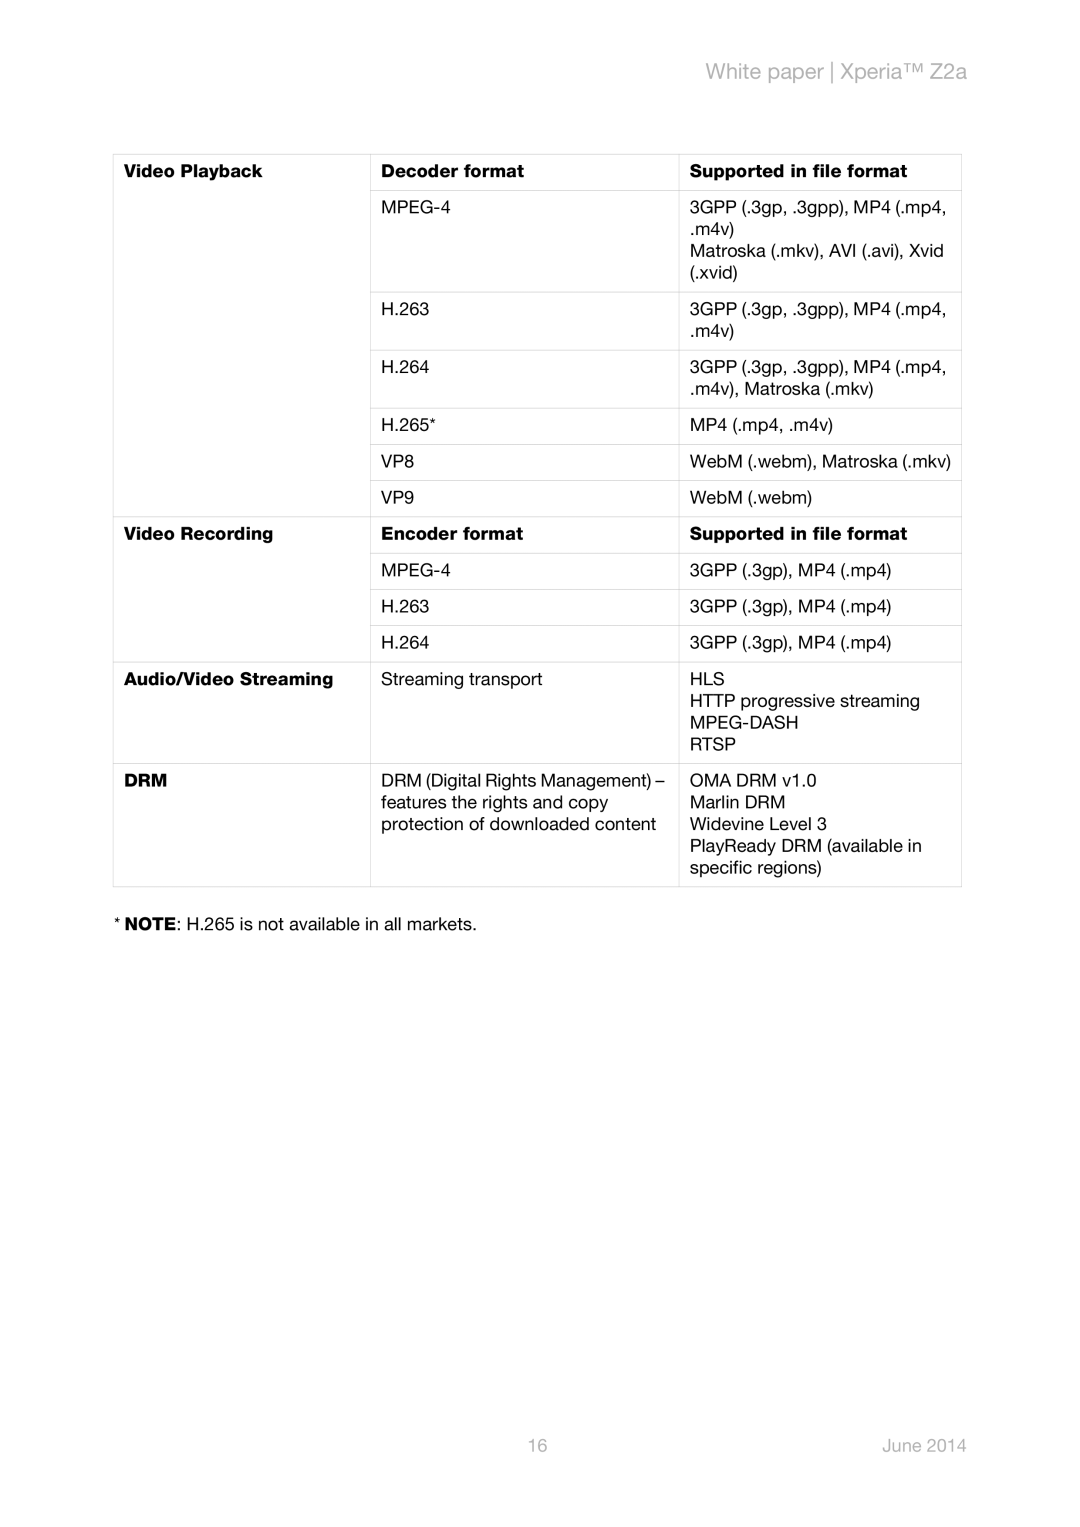 Sony manual White paper Xperia Z2a, June 